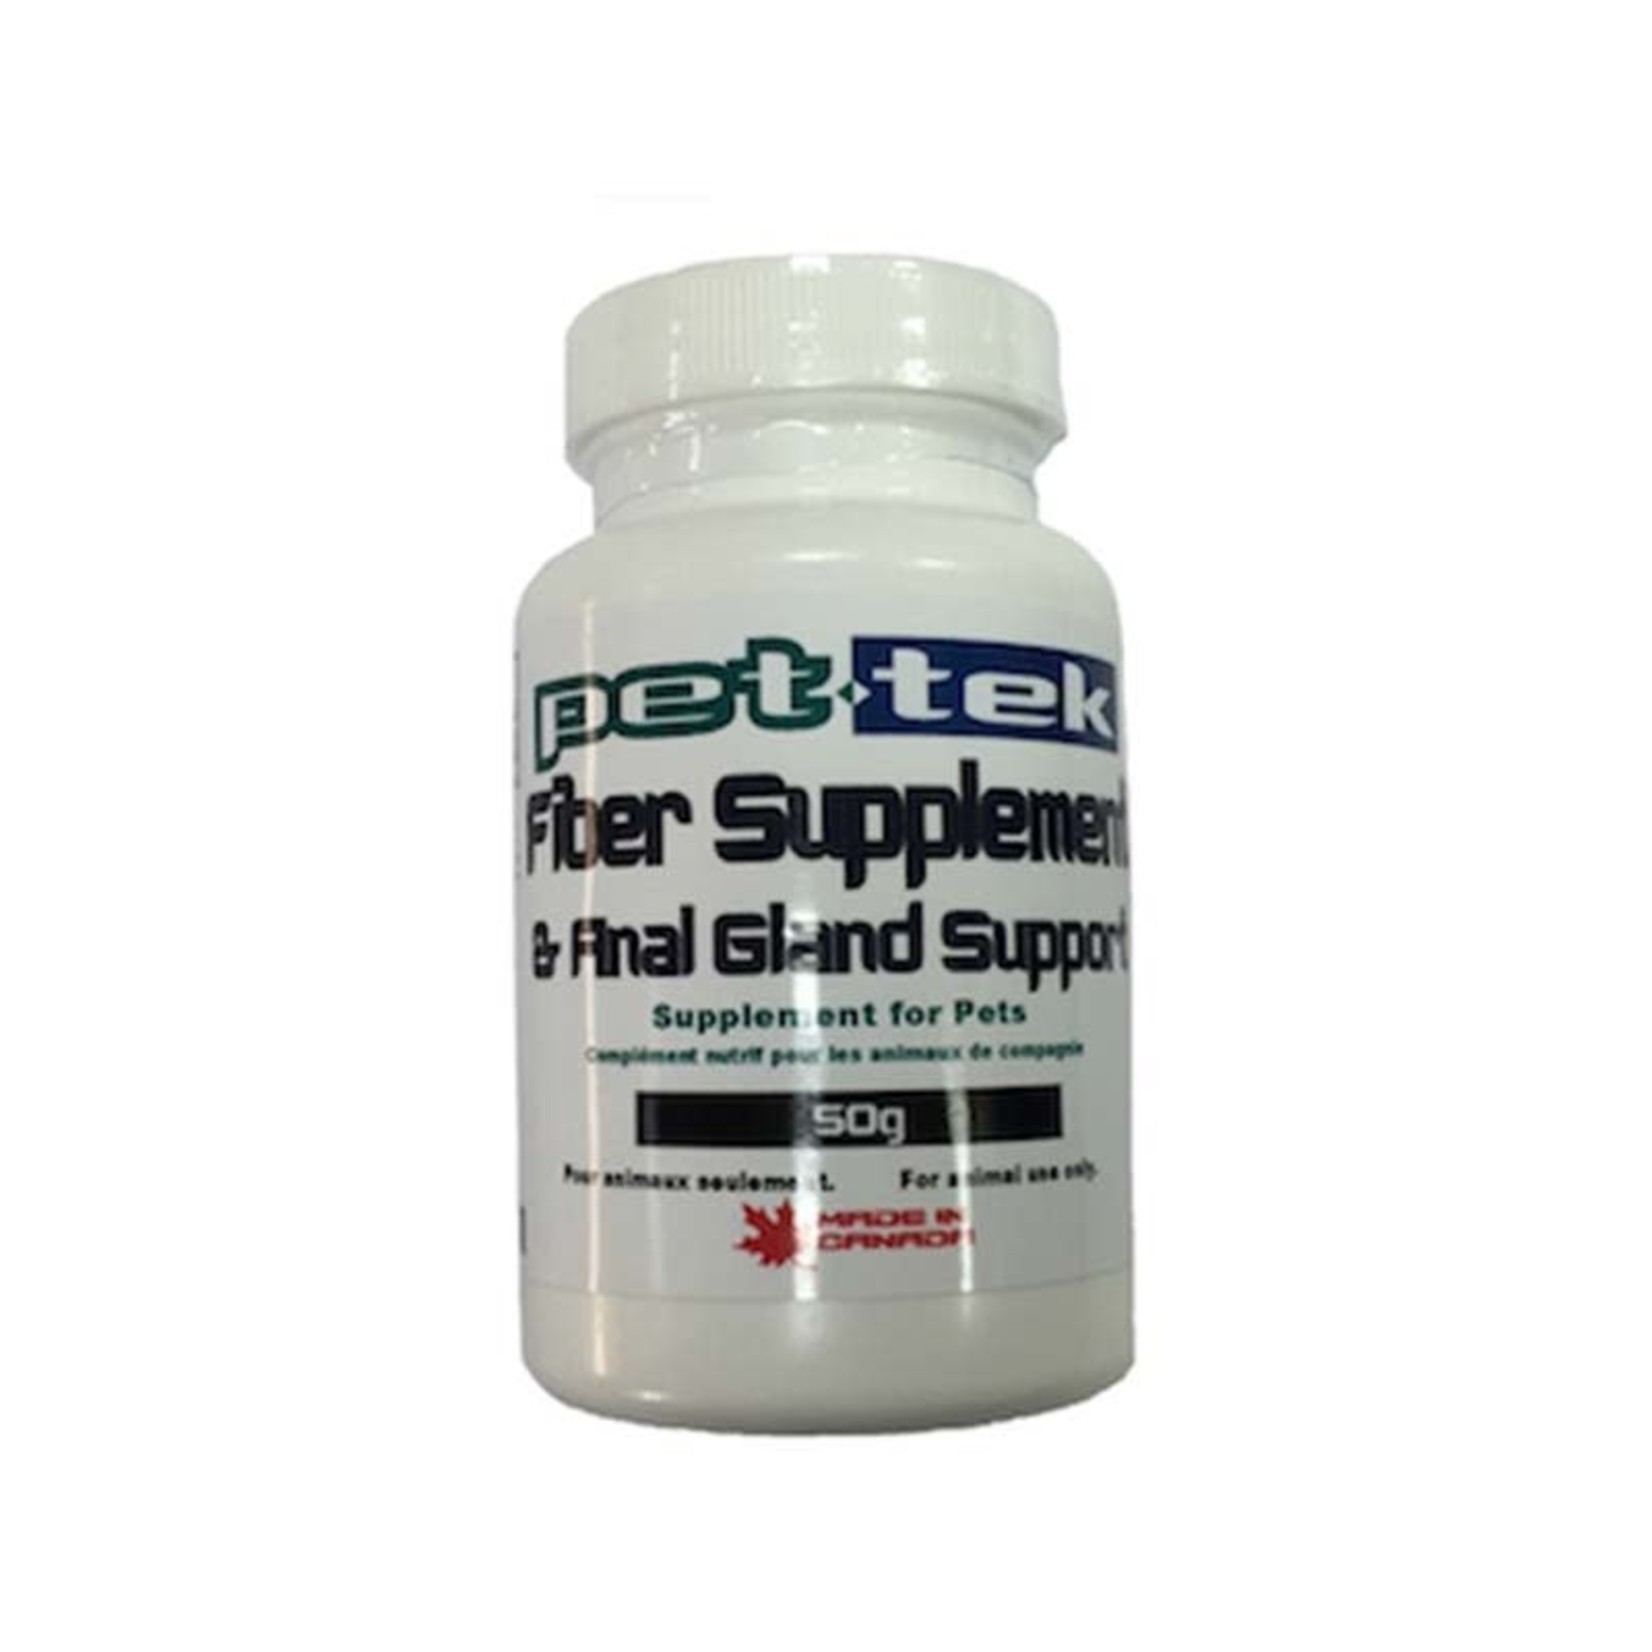 Pet-Tek Pet-Tek Fiber Supplement & Anal Gland Support